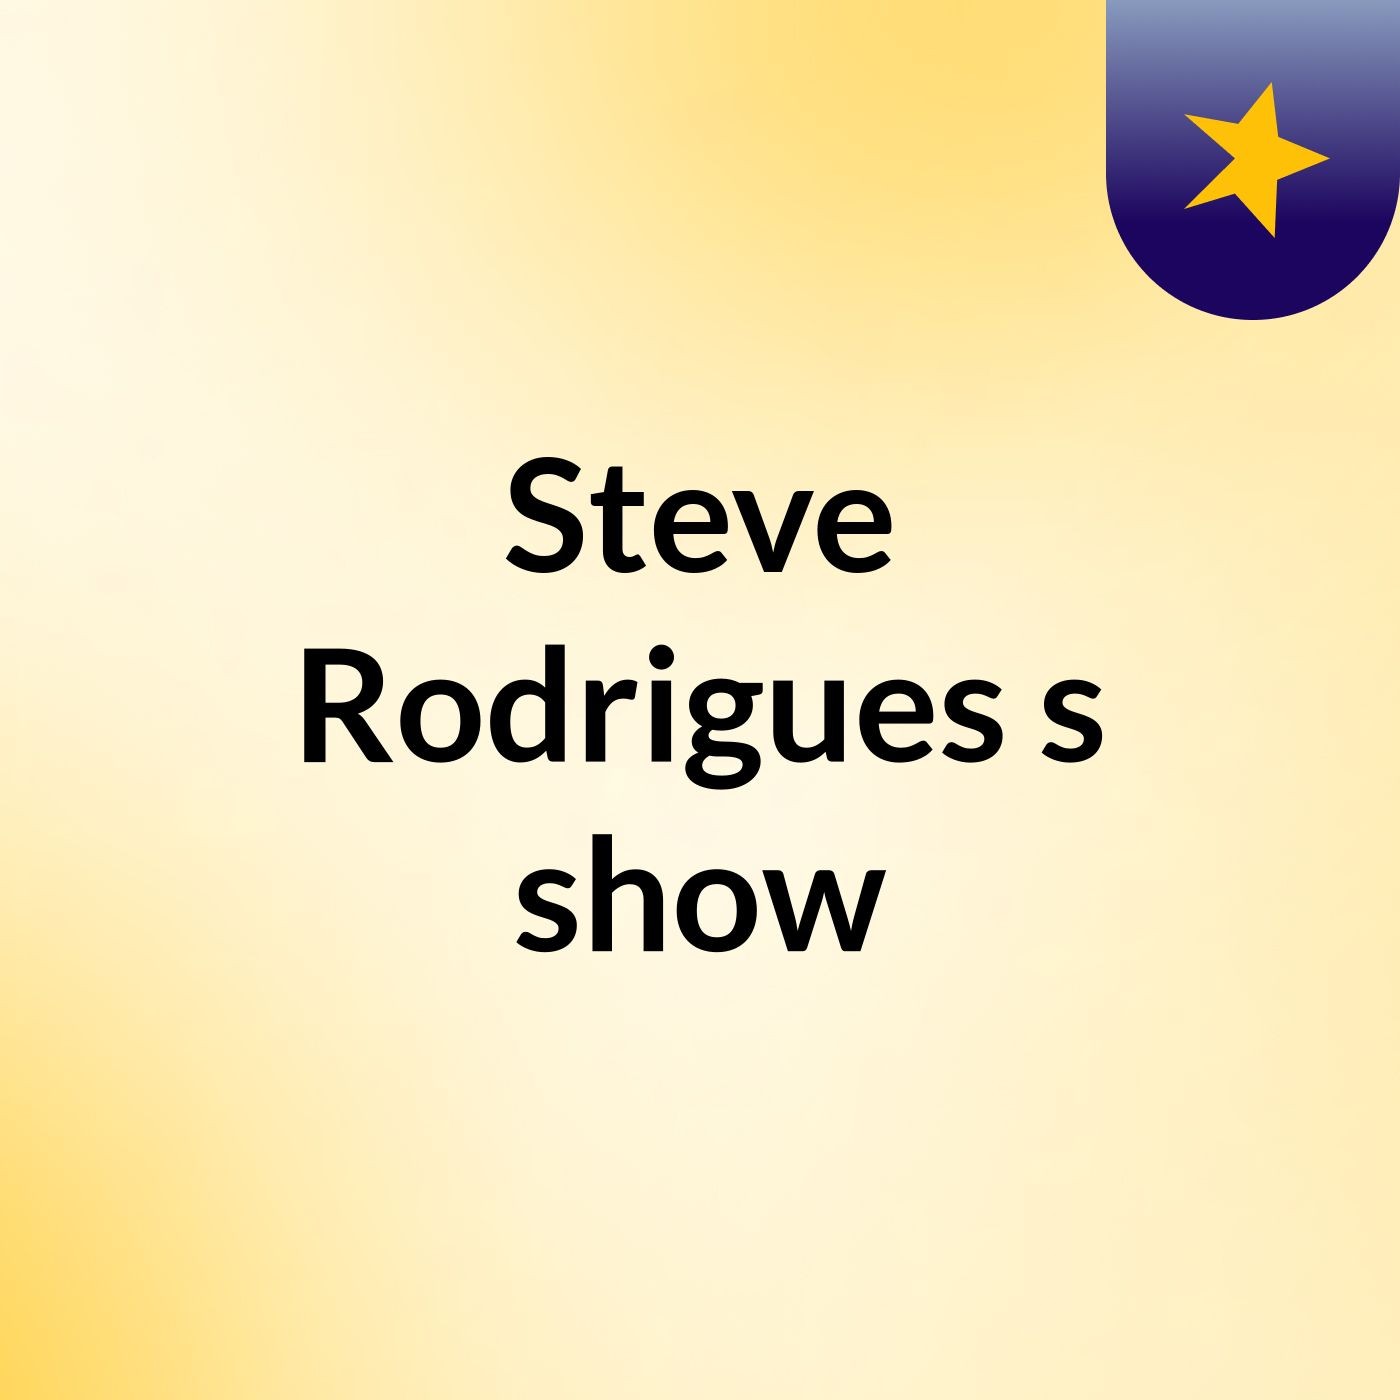 Episode 7 - Steve Rodrigues's show